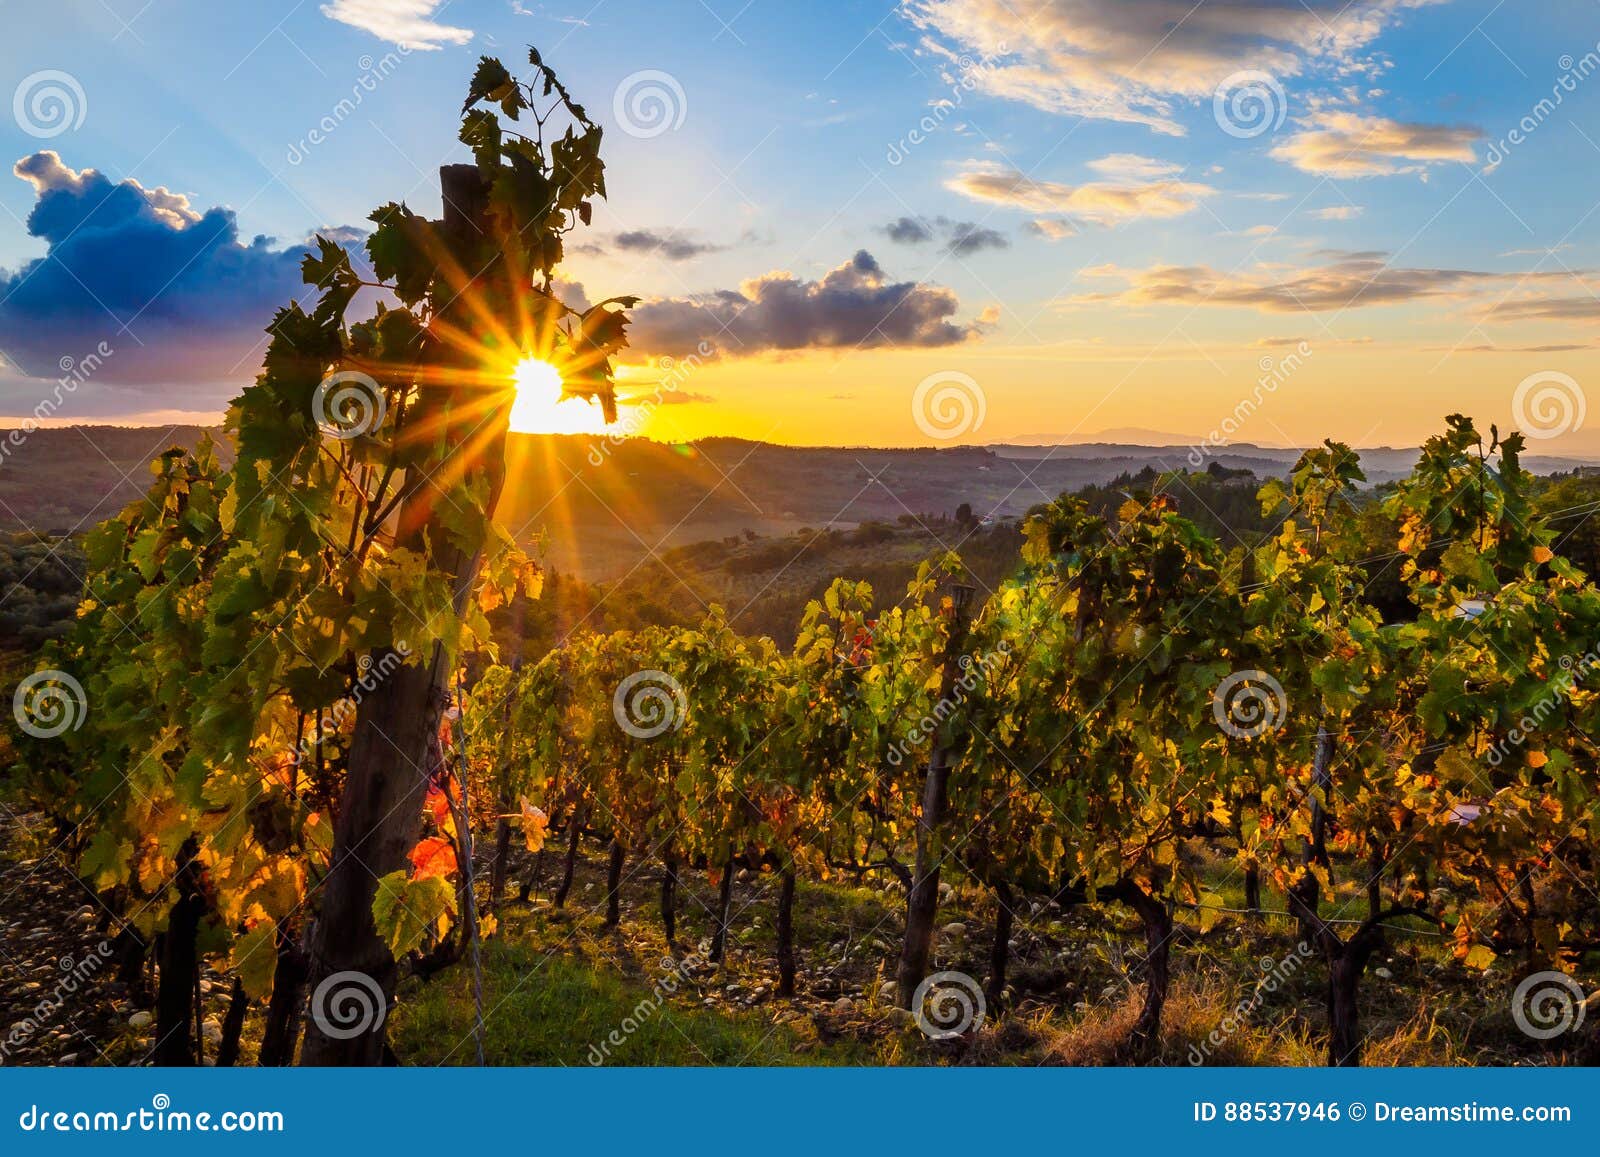 sunset over the vineyard